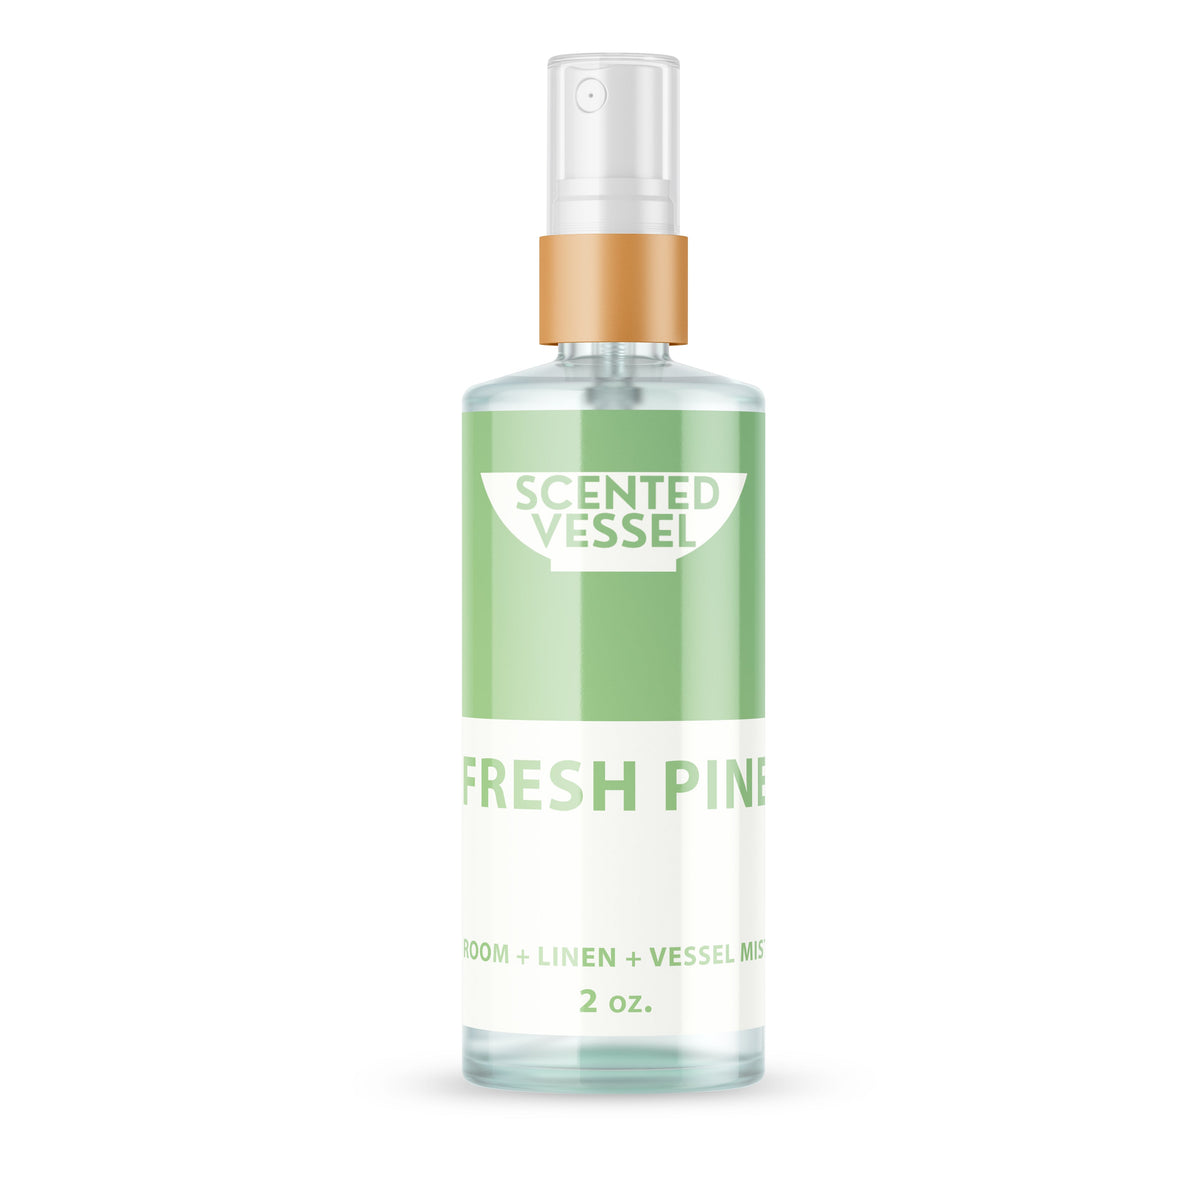 Fresh Pine 2oz Fragrance Mist by Scented Vessel